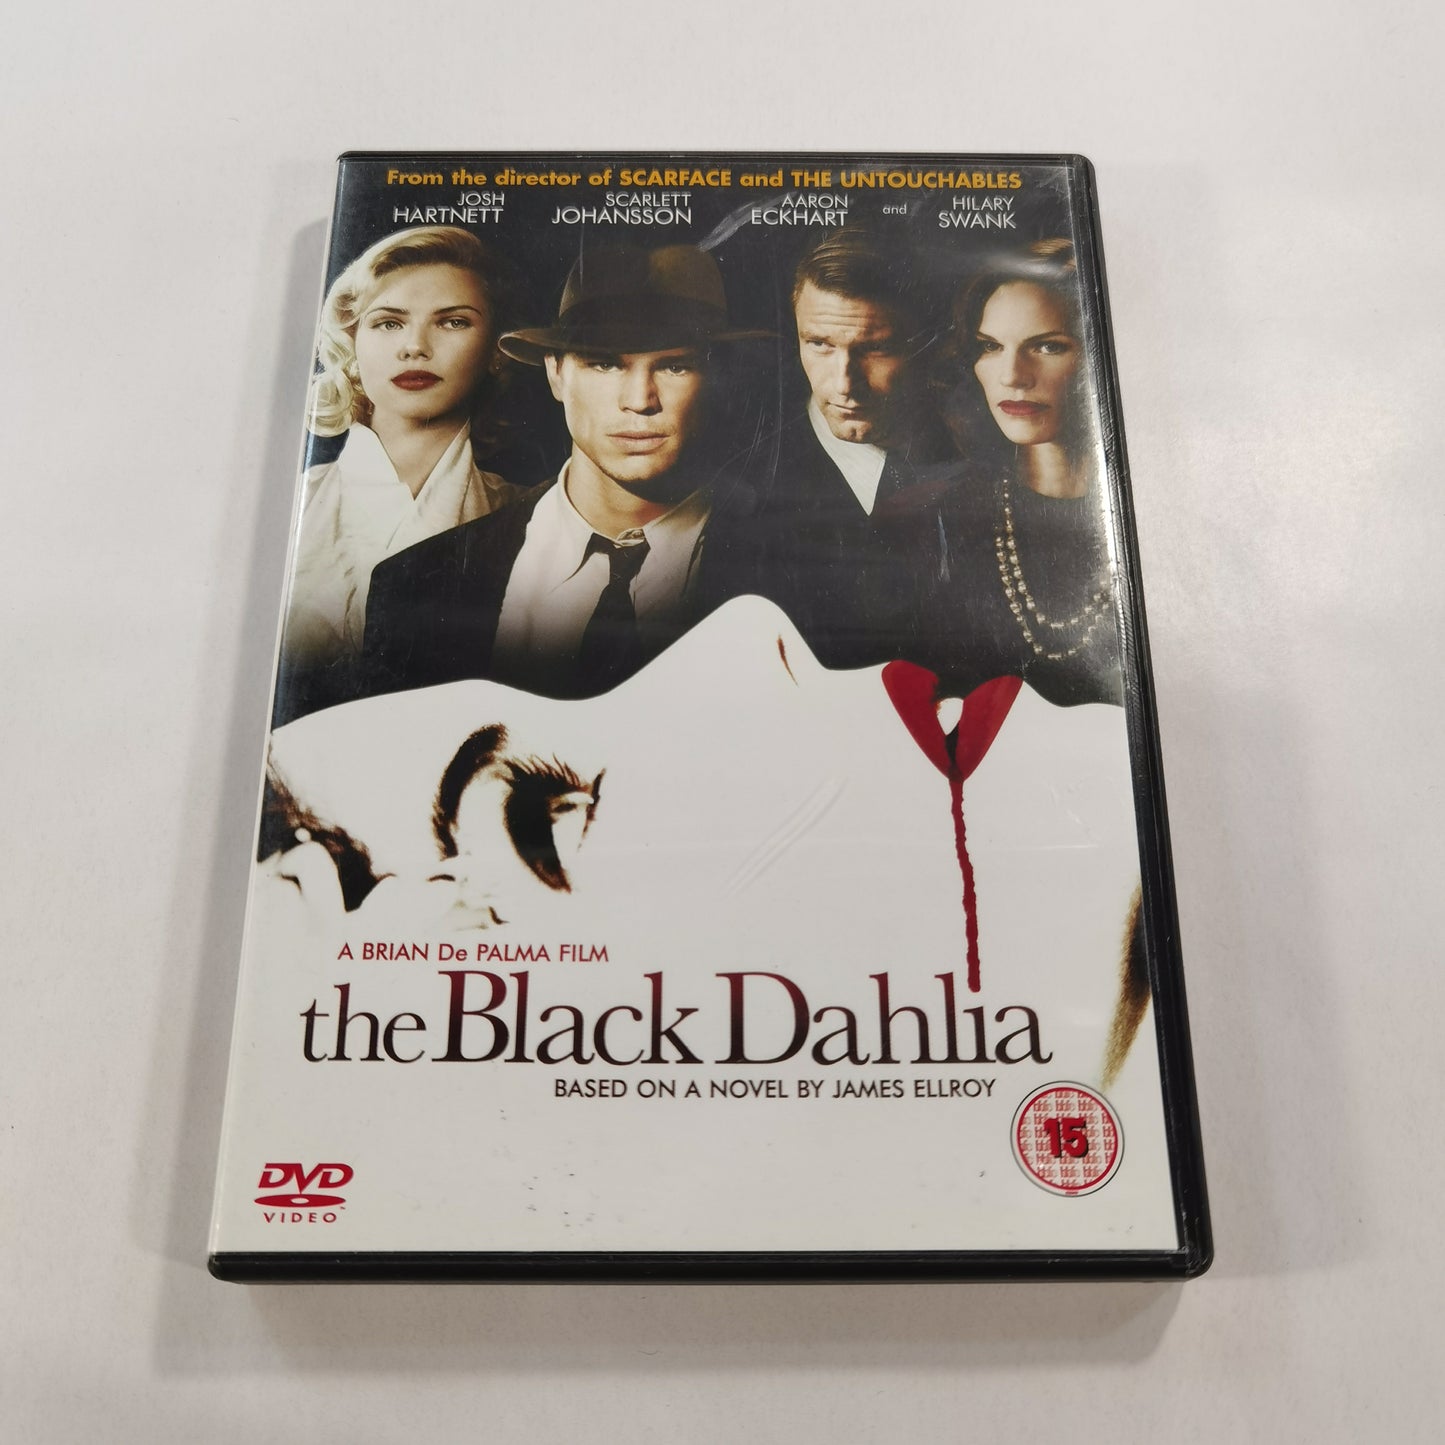 The Black Dahlia (2006) - DVD UK